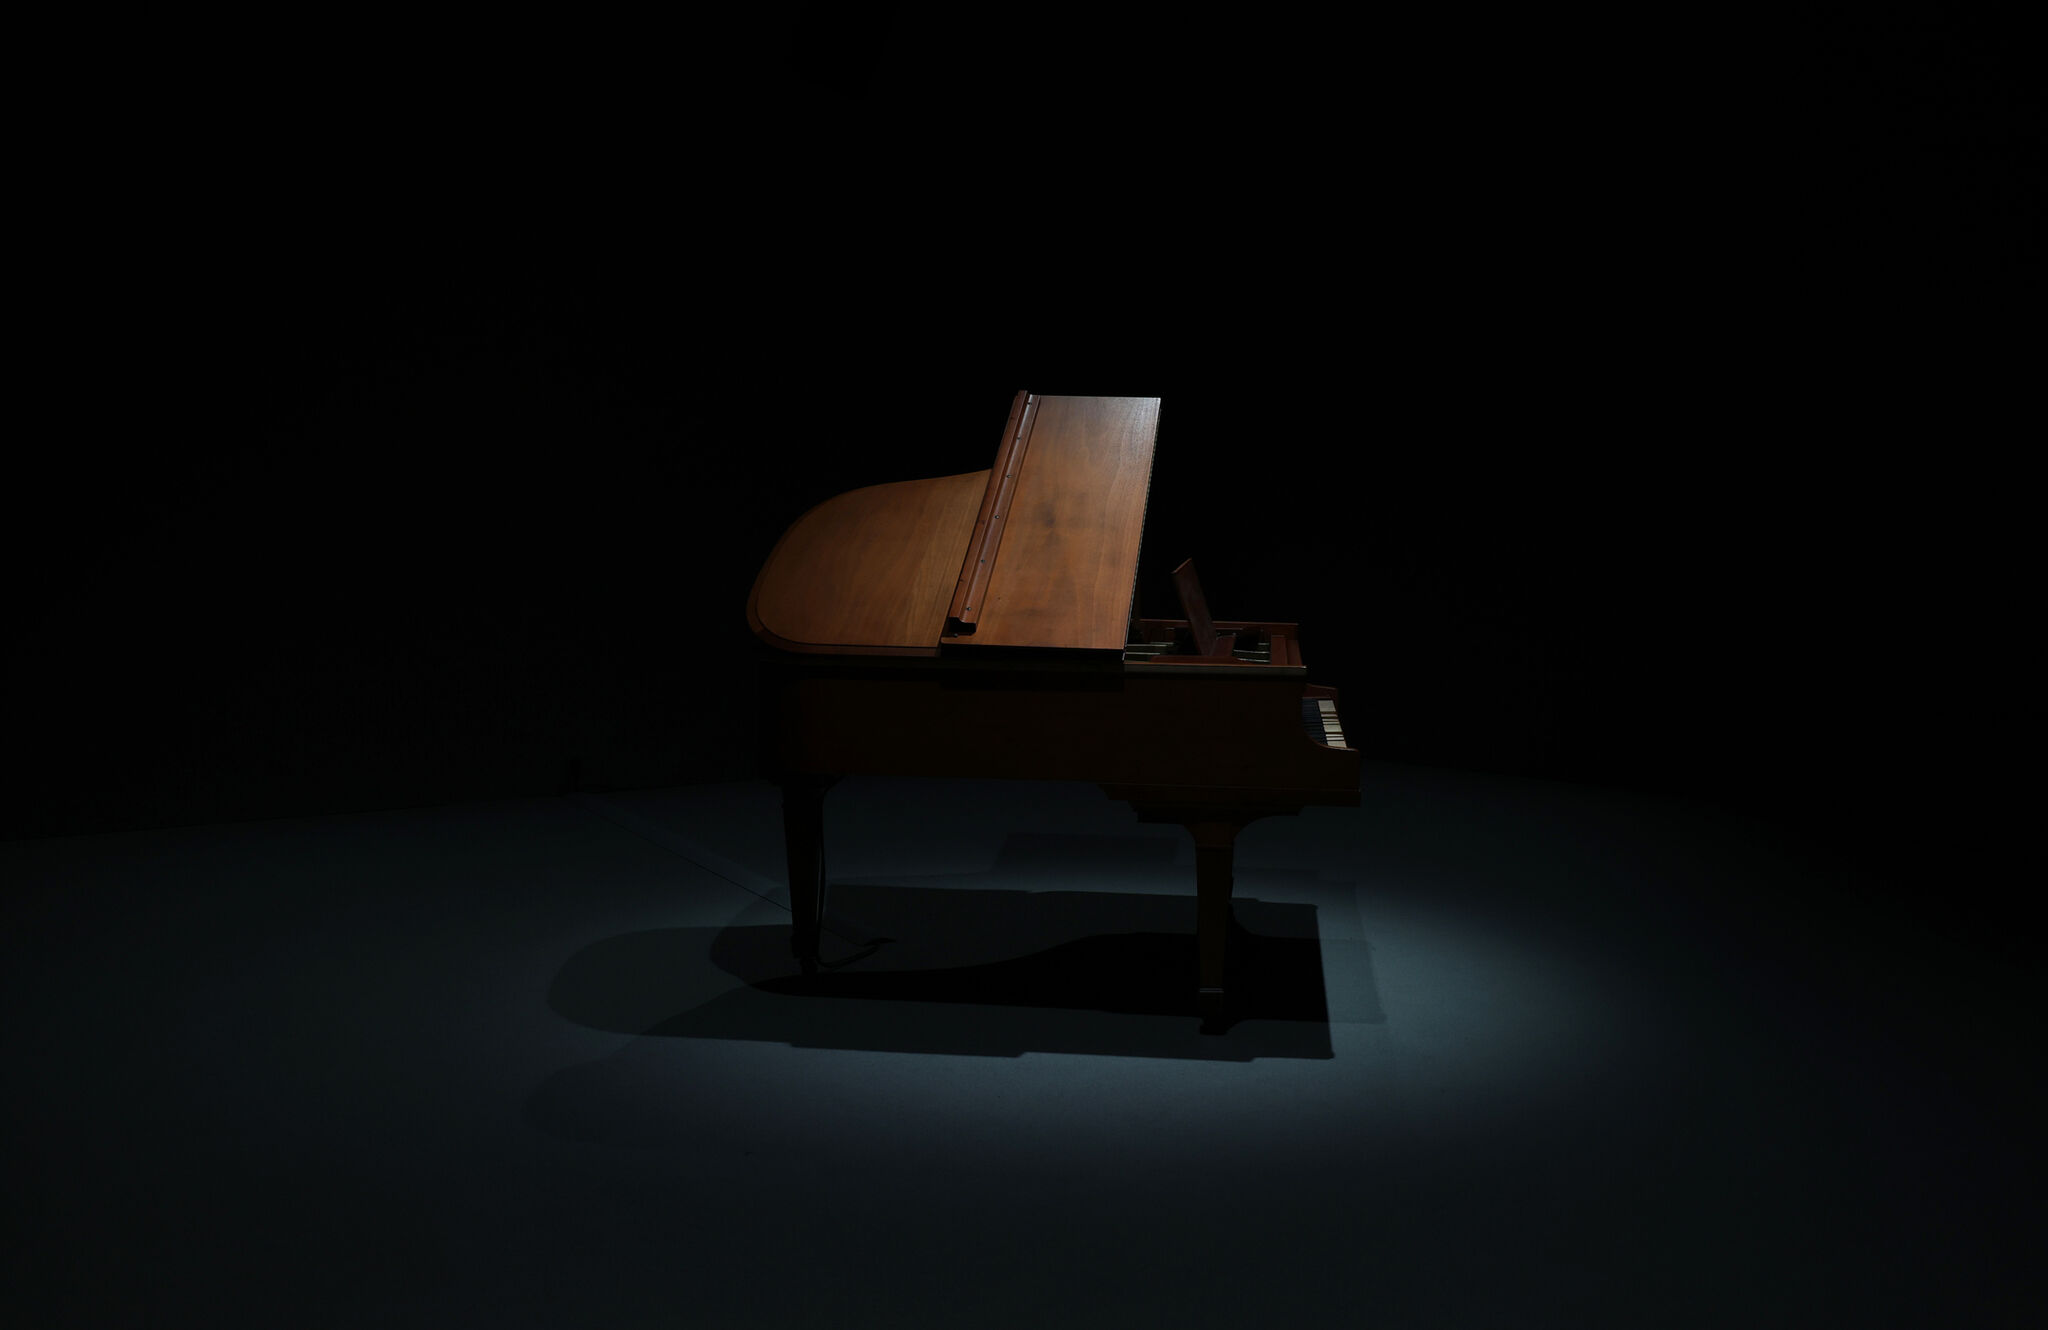 A grand piano illuminated by a single spotlight against a dark background.